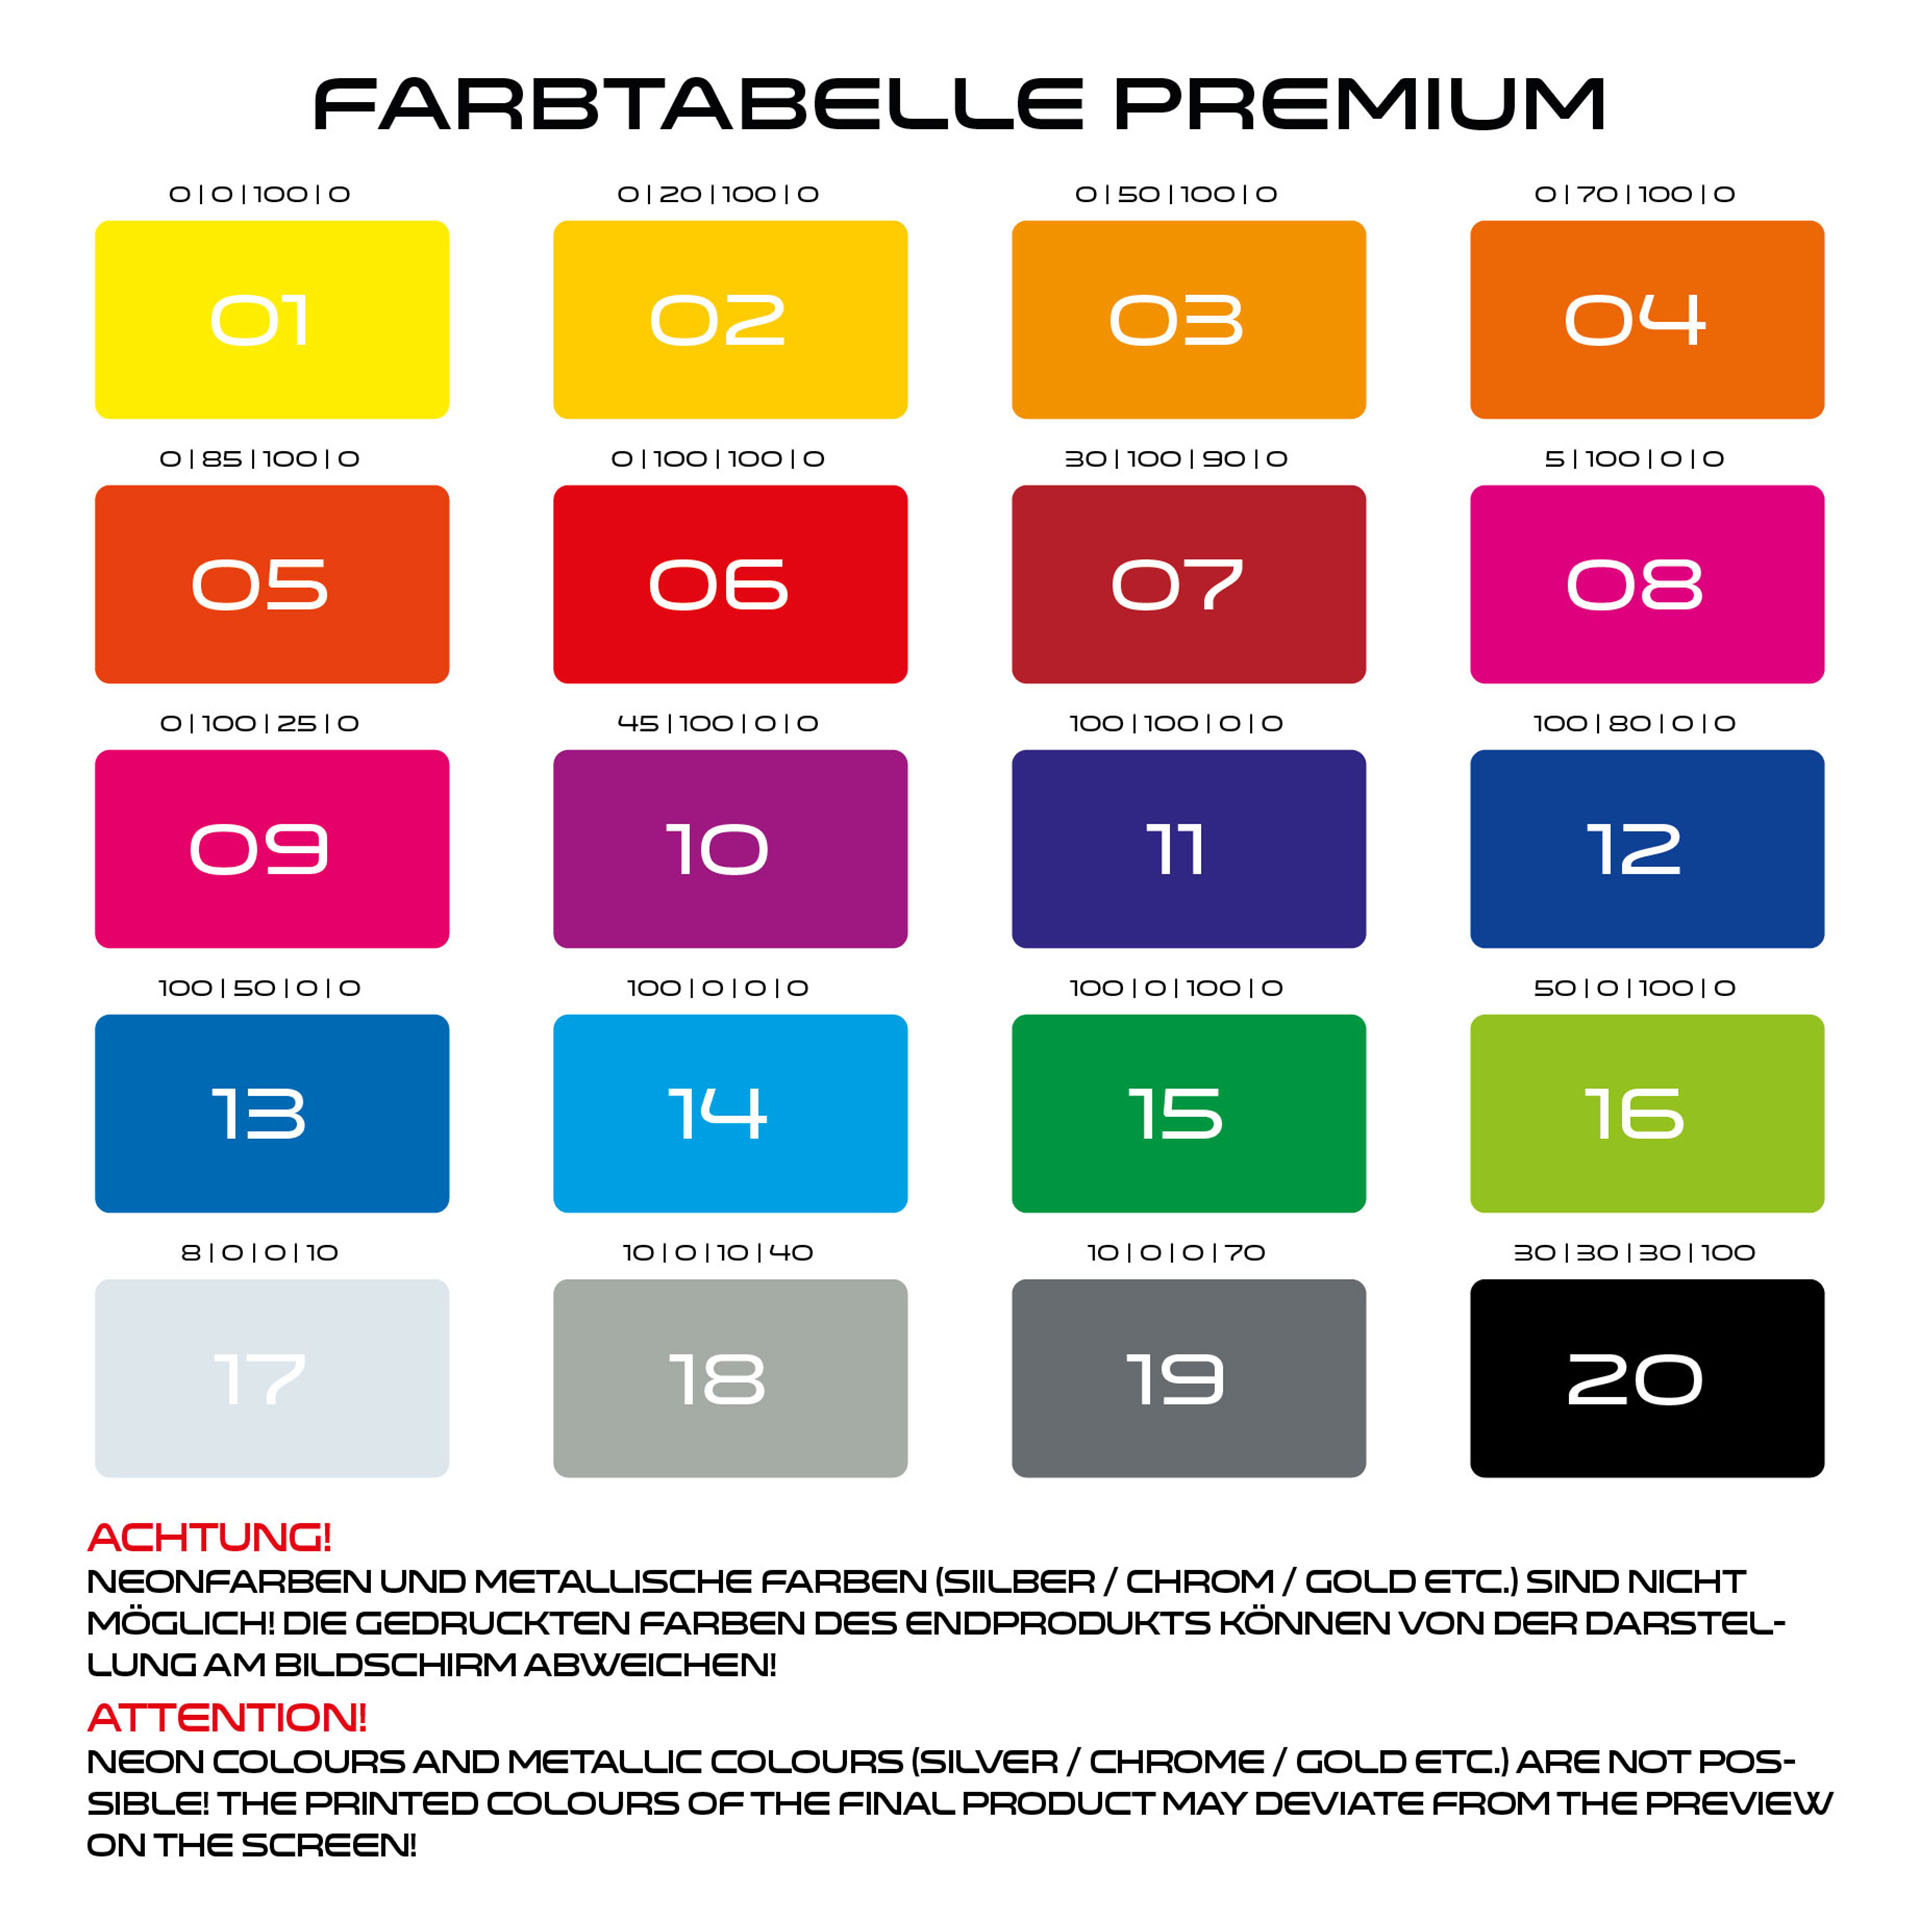 Cafe Racer Felgenaufkleber Premium Design Hexagon W Farbtabelle Premium Wheelsticker